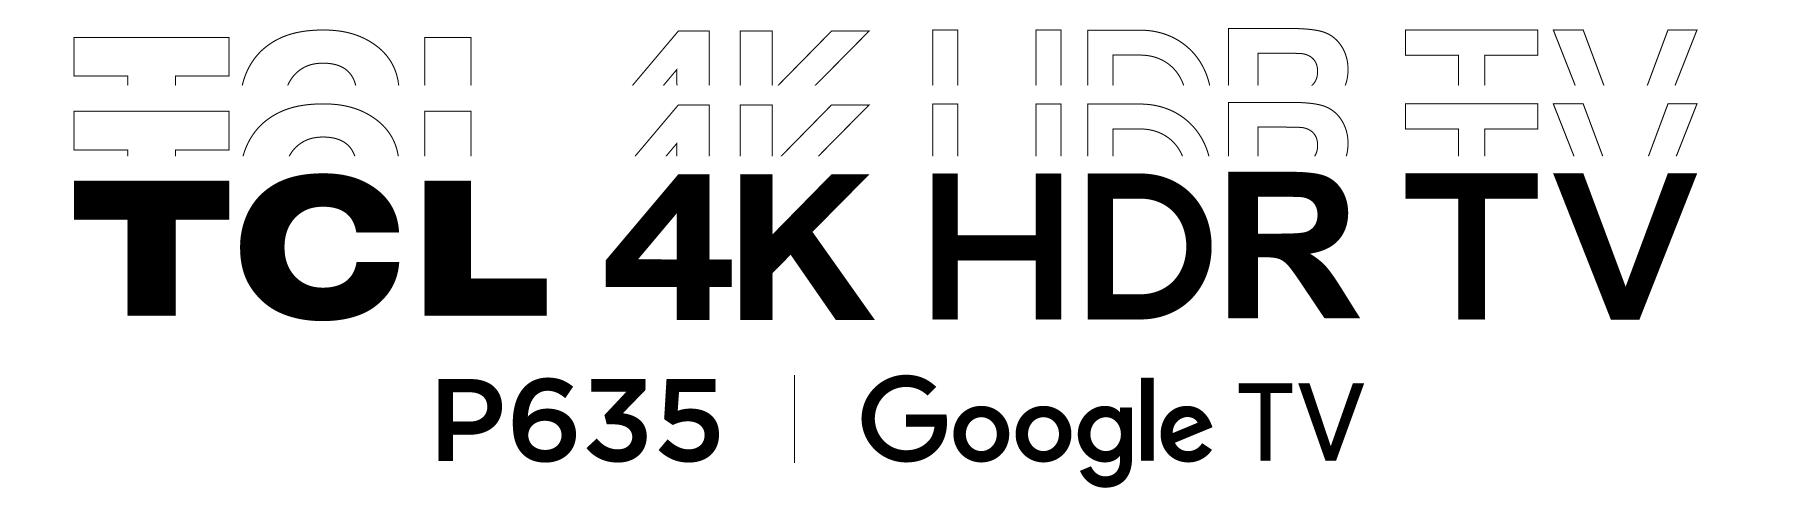 P635 4K HDR Google TV